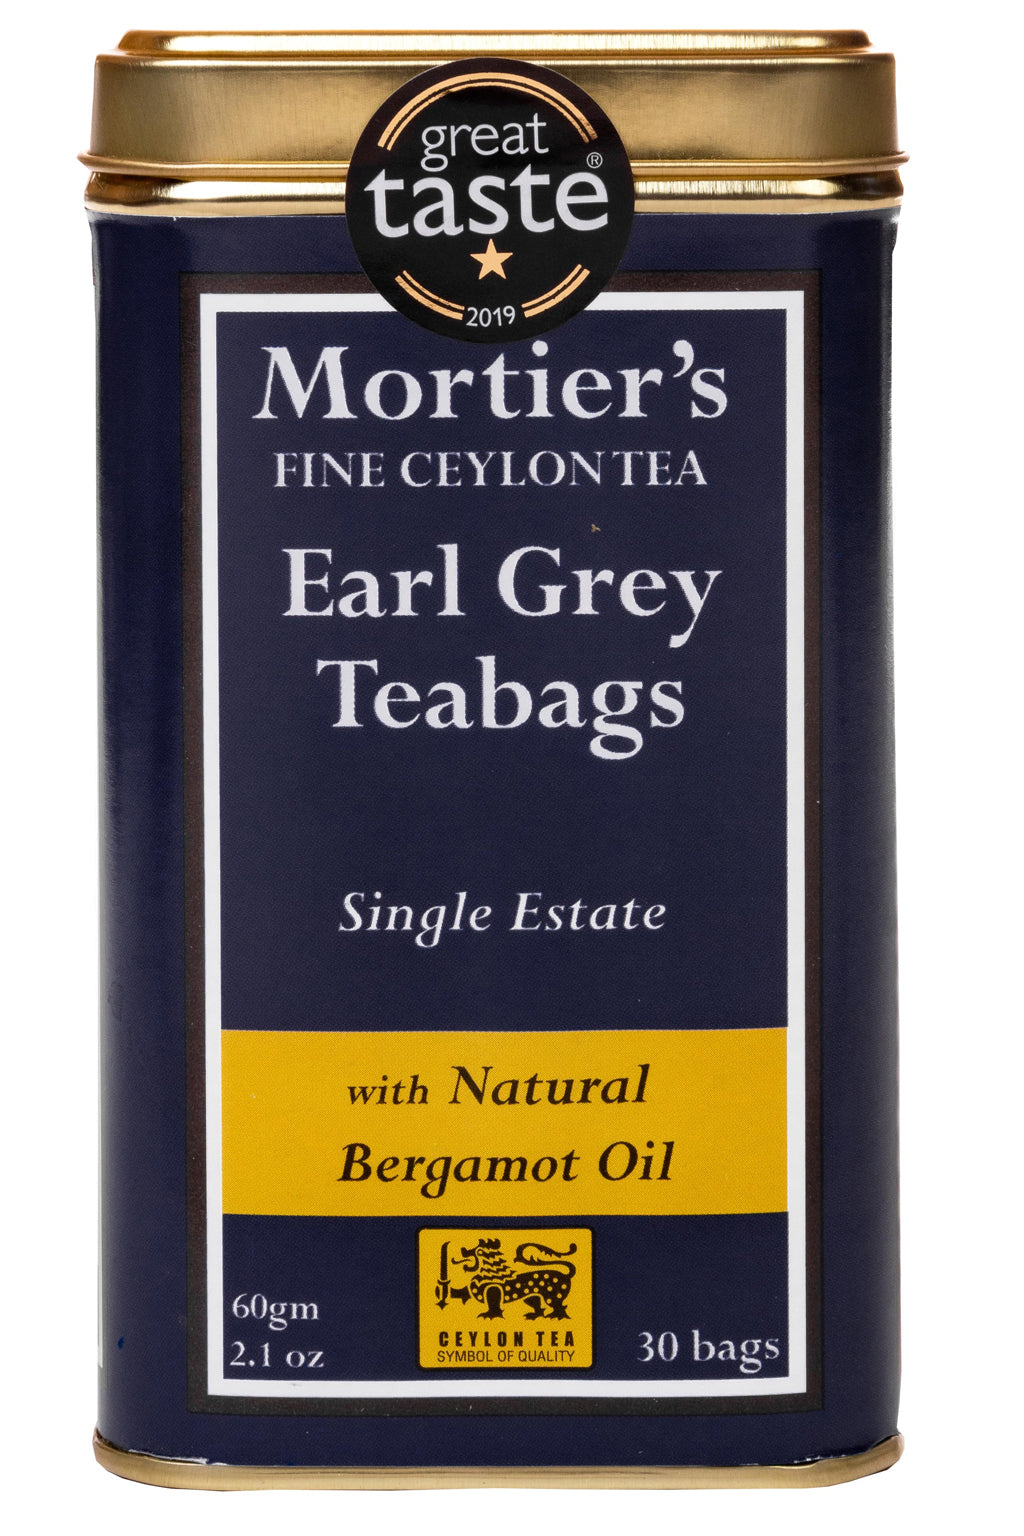 GREAT TASTE AWARD  - TEA BAGS IN CADDY -  EARL GREY (30)